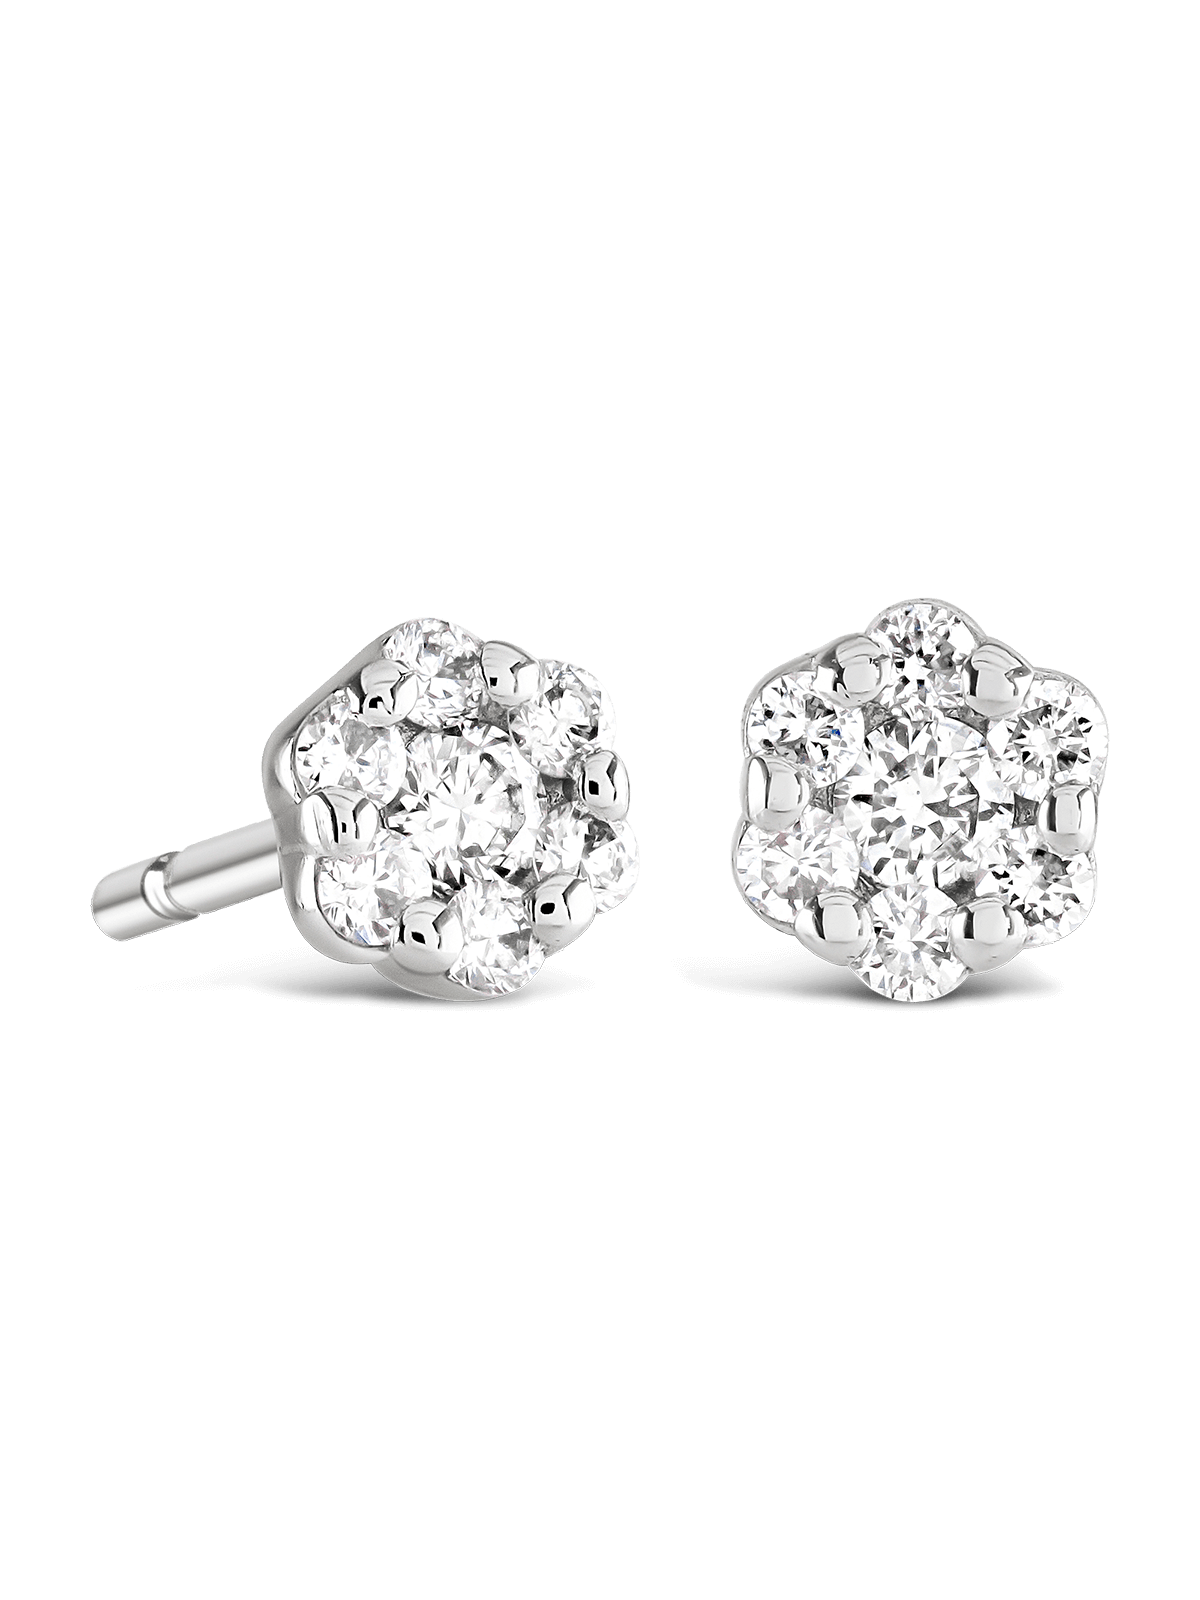 Brown & Newirth Bella 0.15ct Brilliant Cut Diamond Cluster Earrings in 9ct White Gold